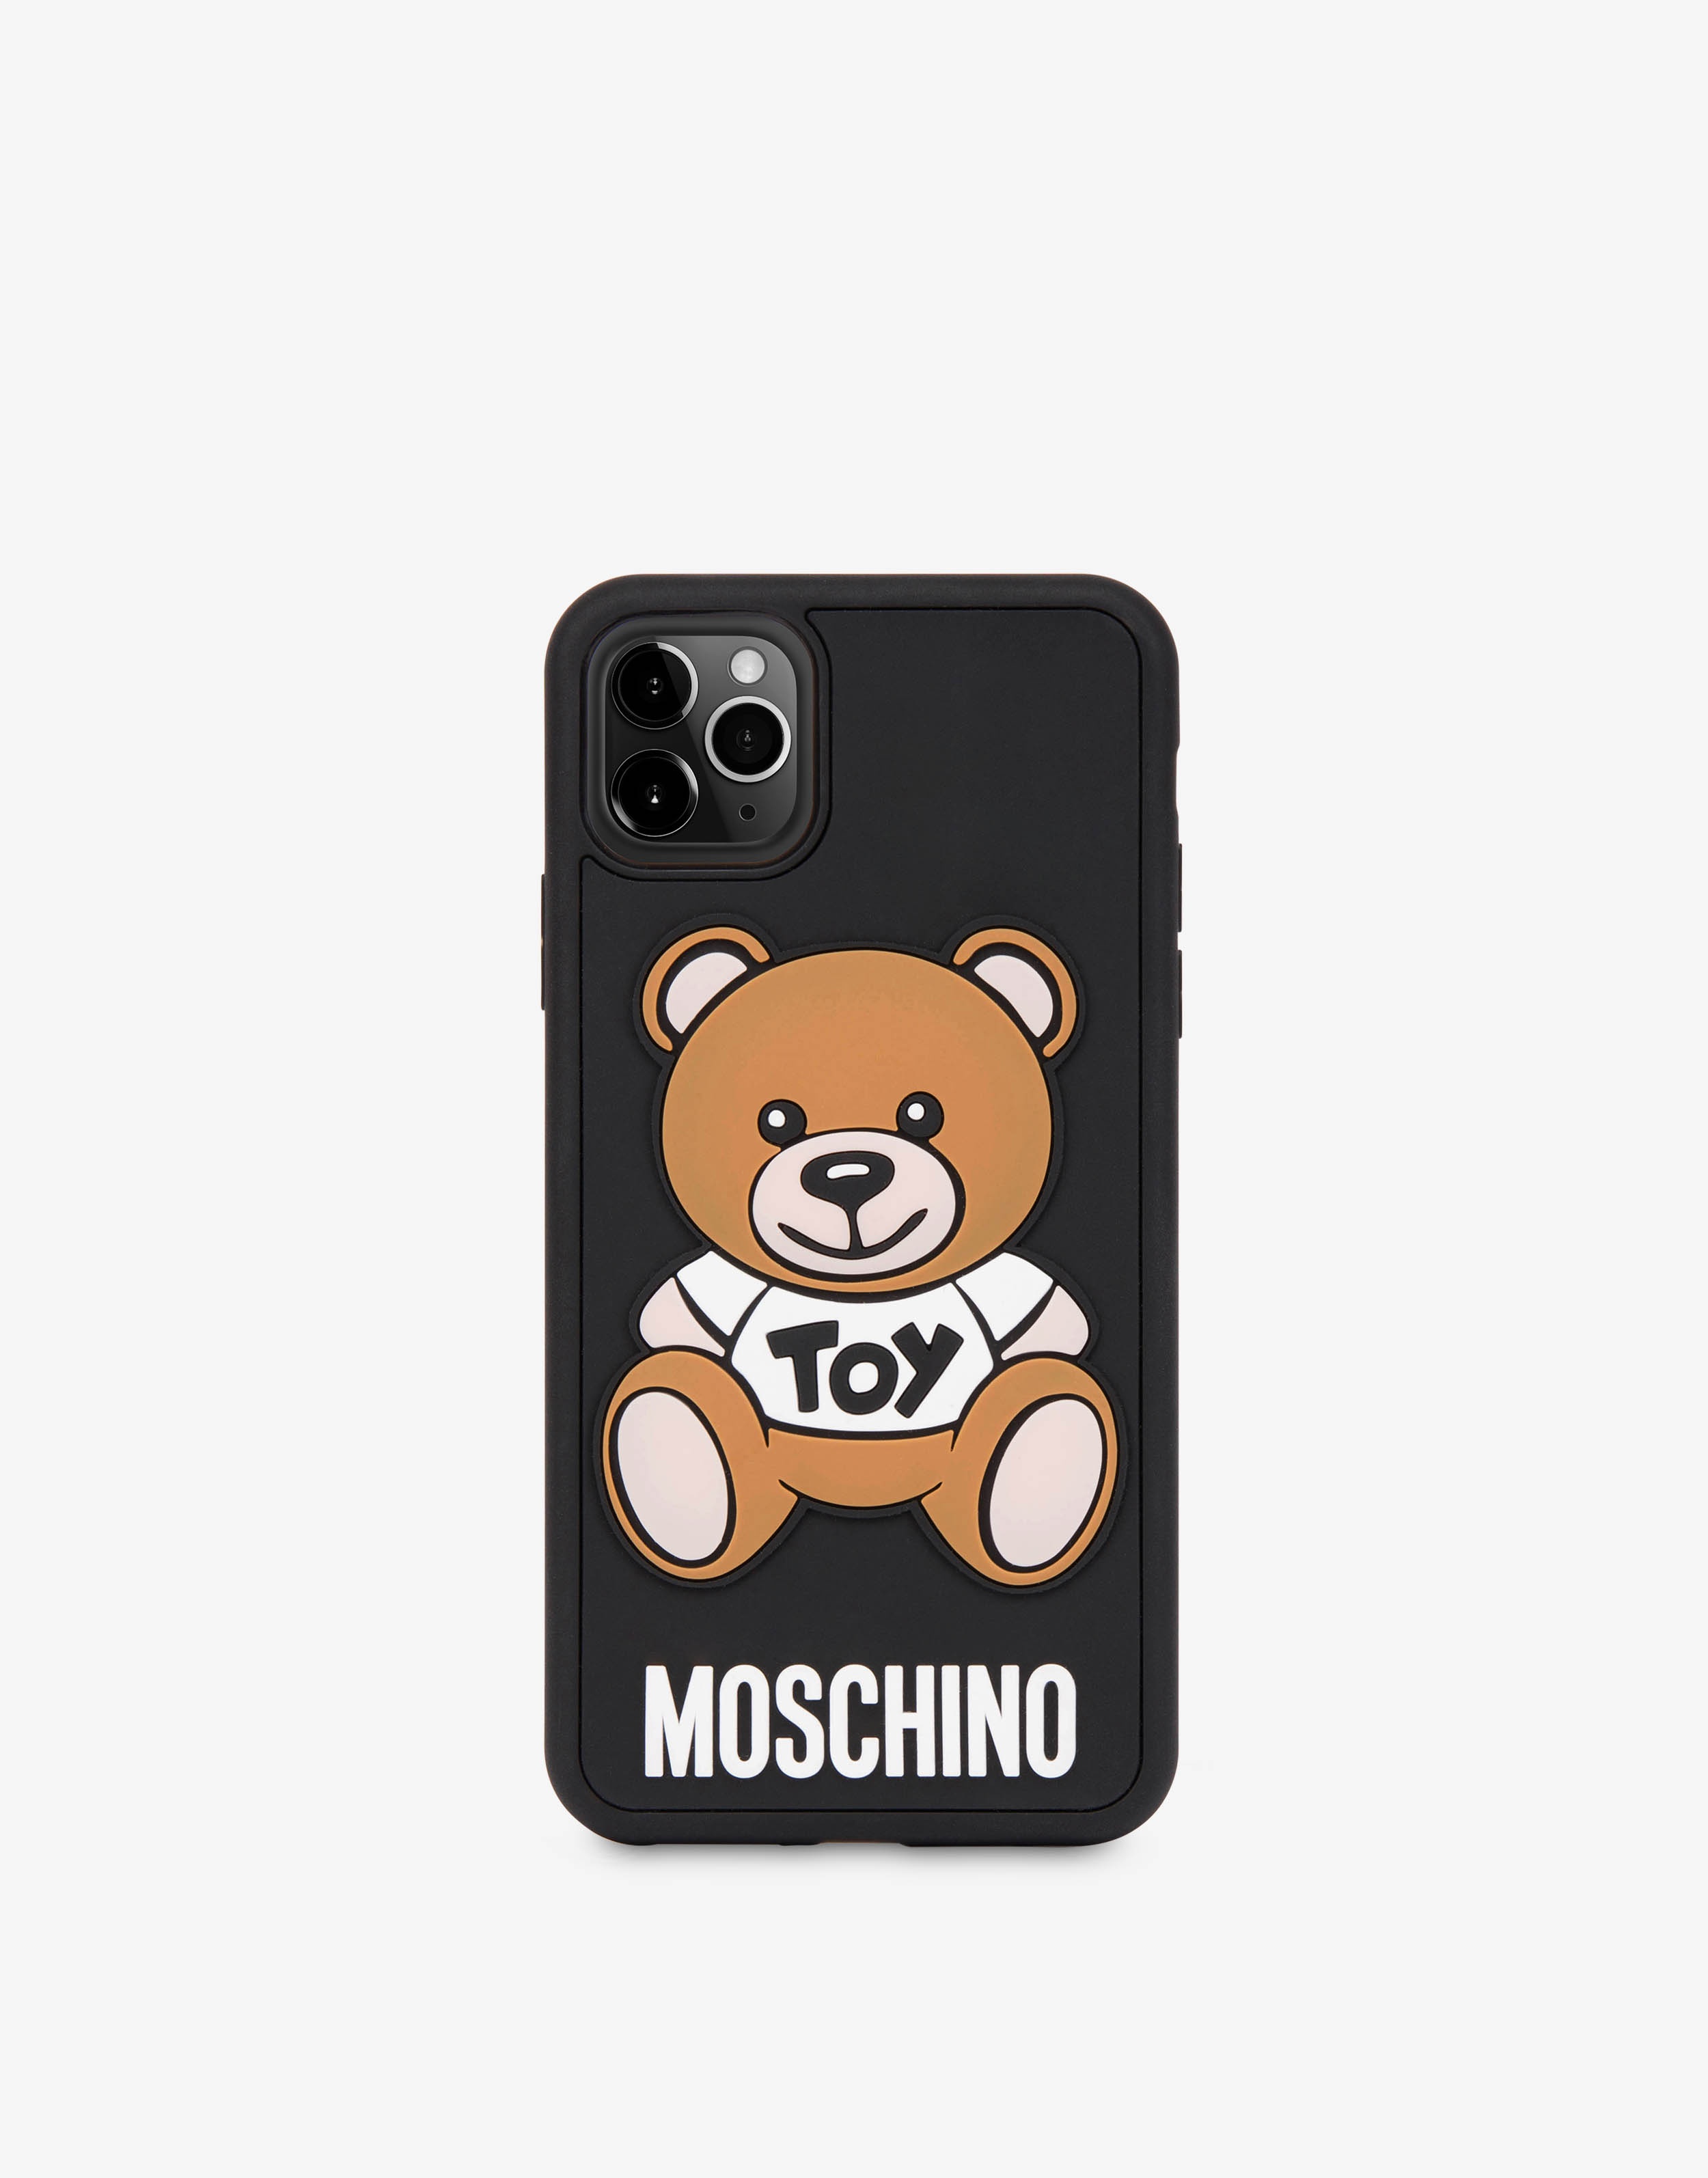 MOSCHINO TEDDY BEAR IPHONE XI PRO COVER - 1